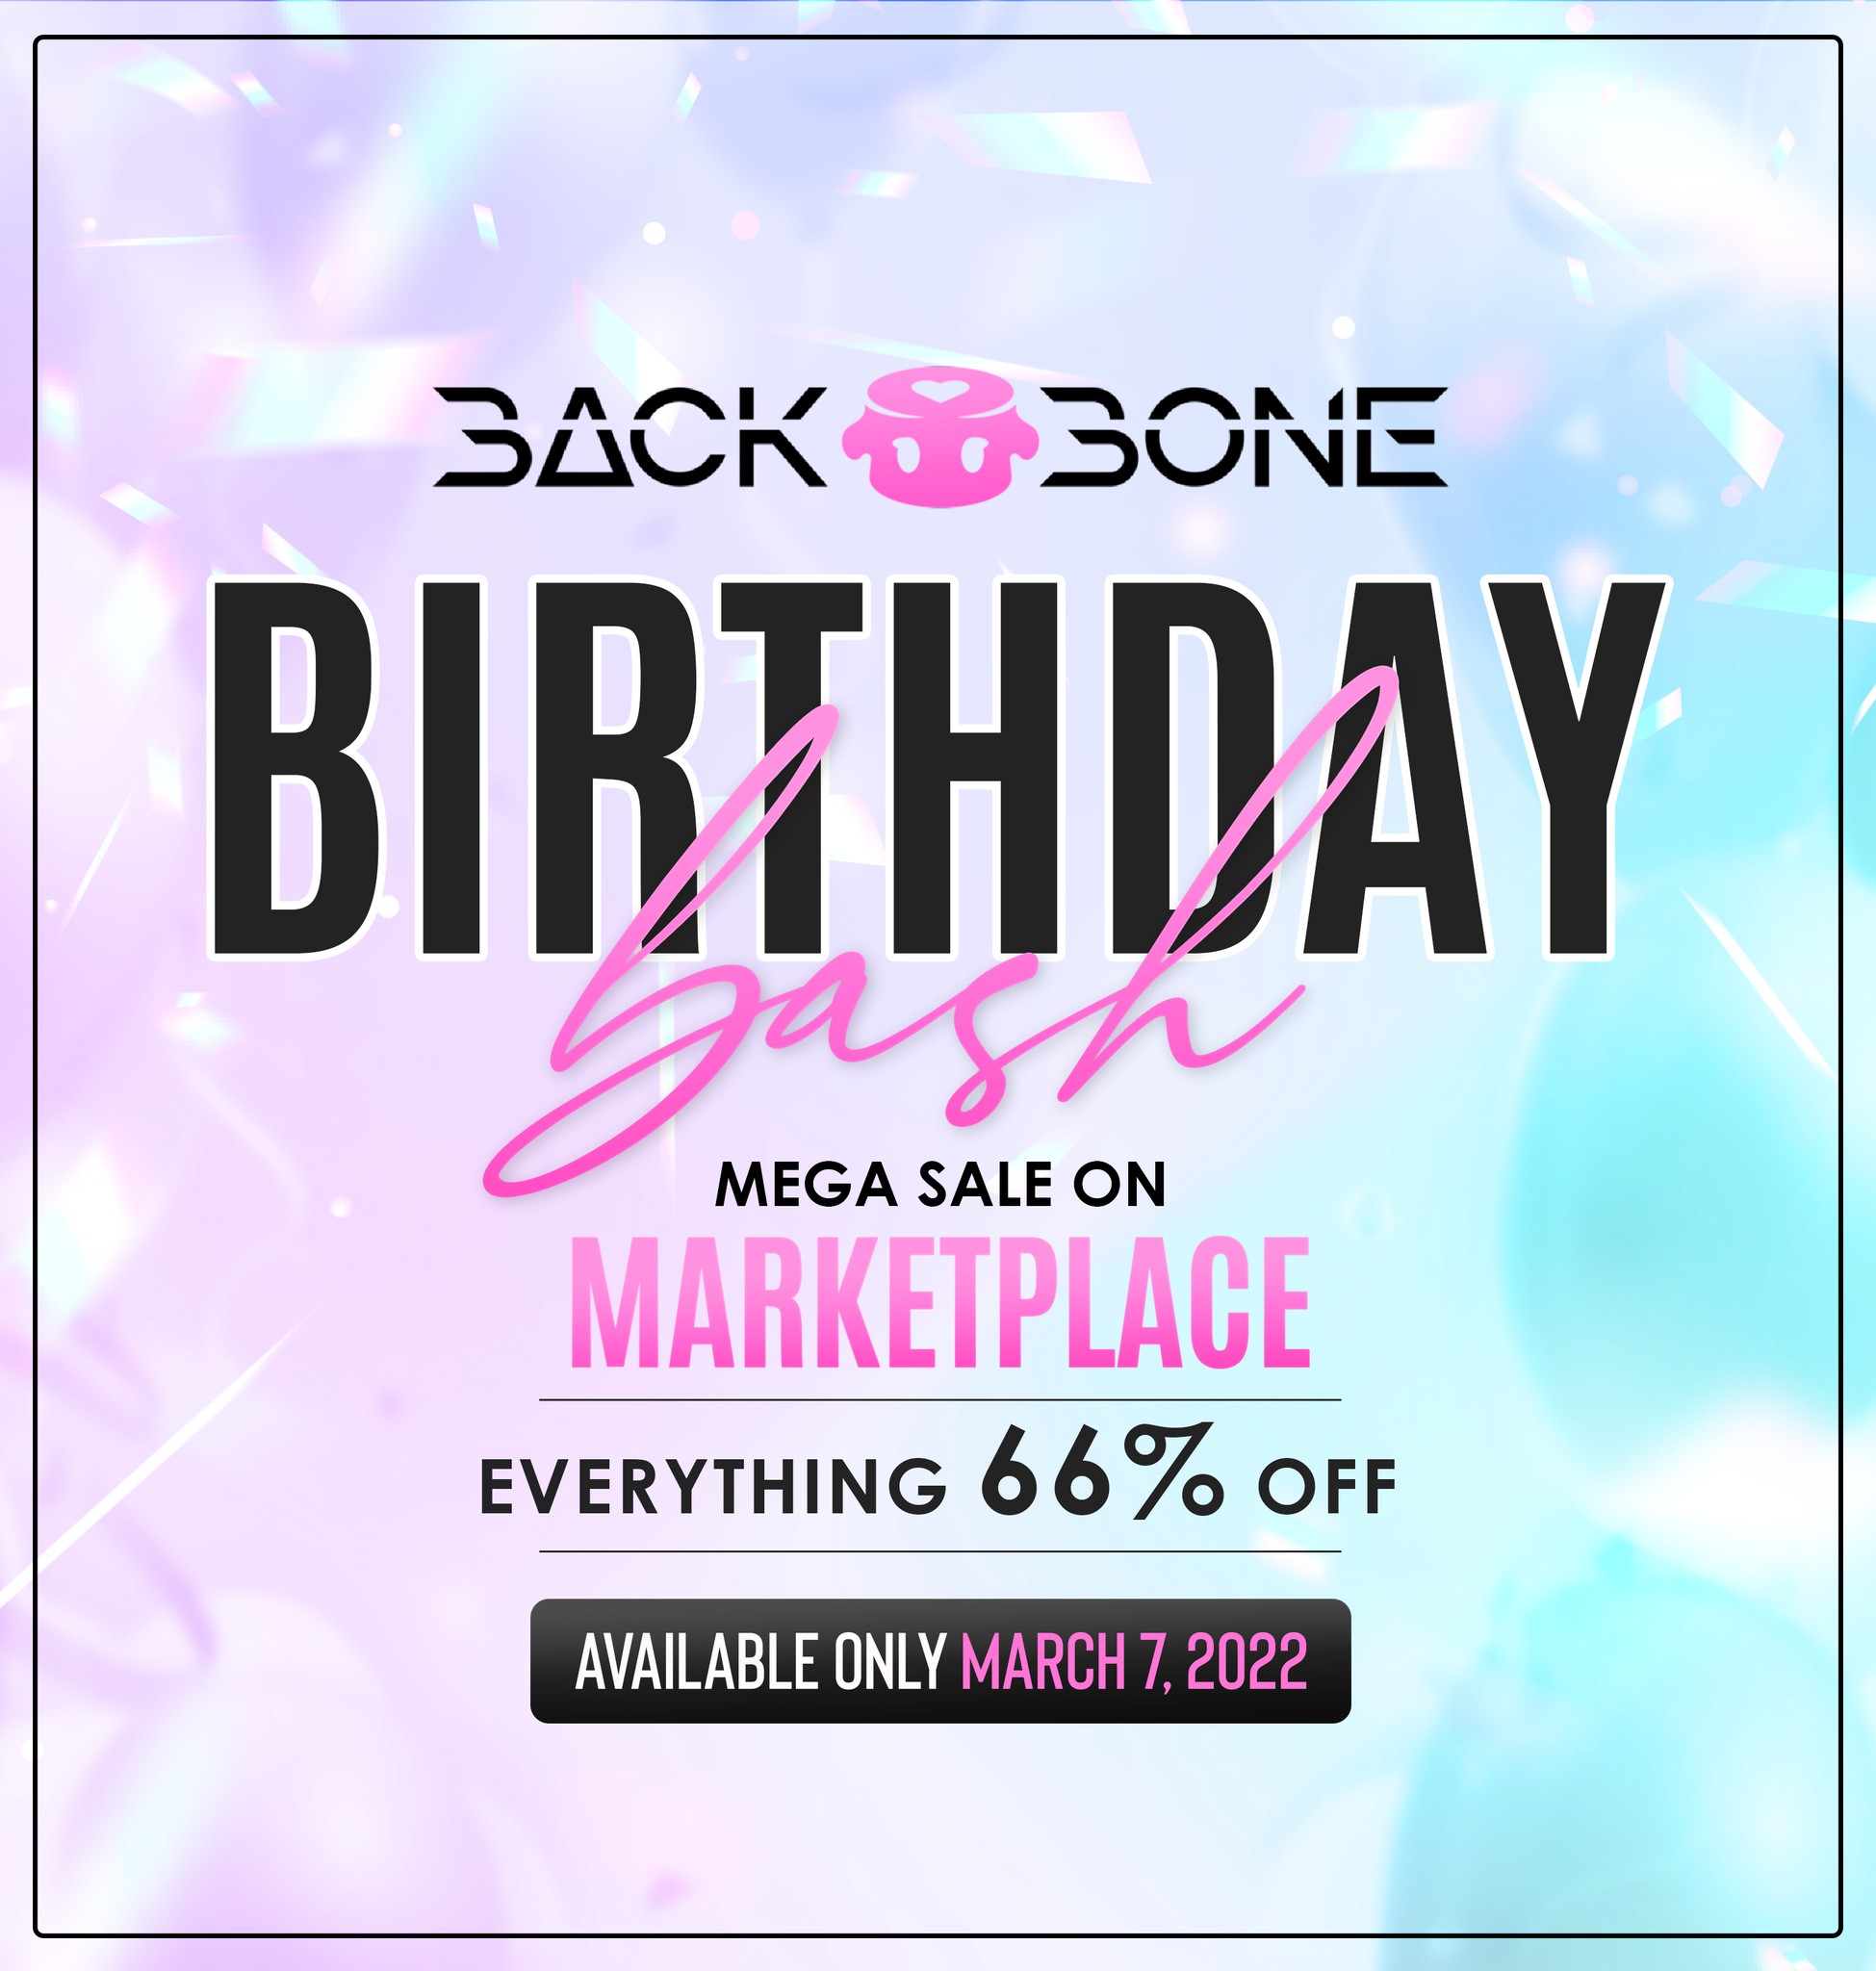 BackBone – Birthday Bash Mega Sale